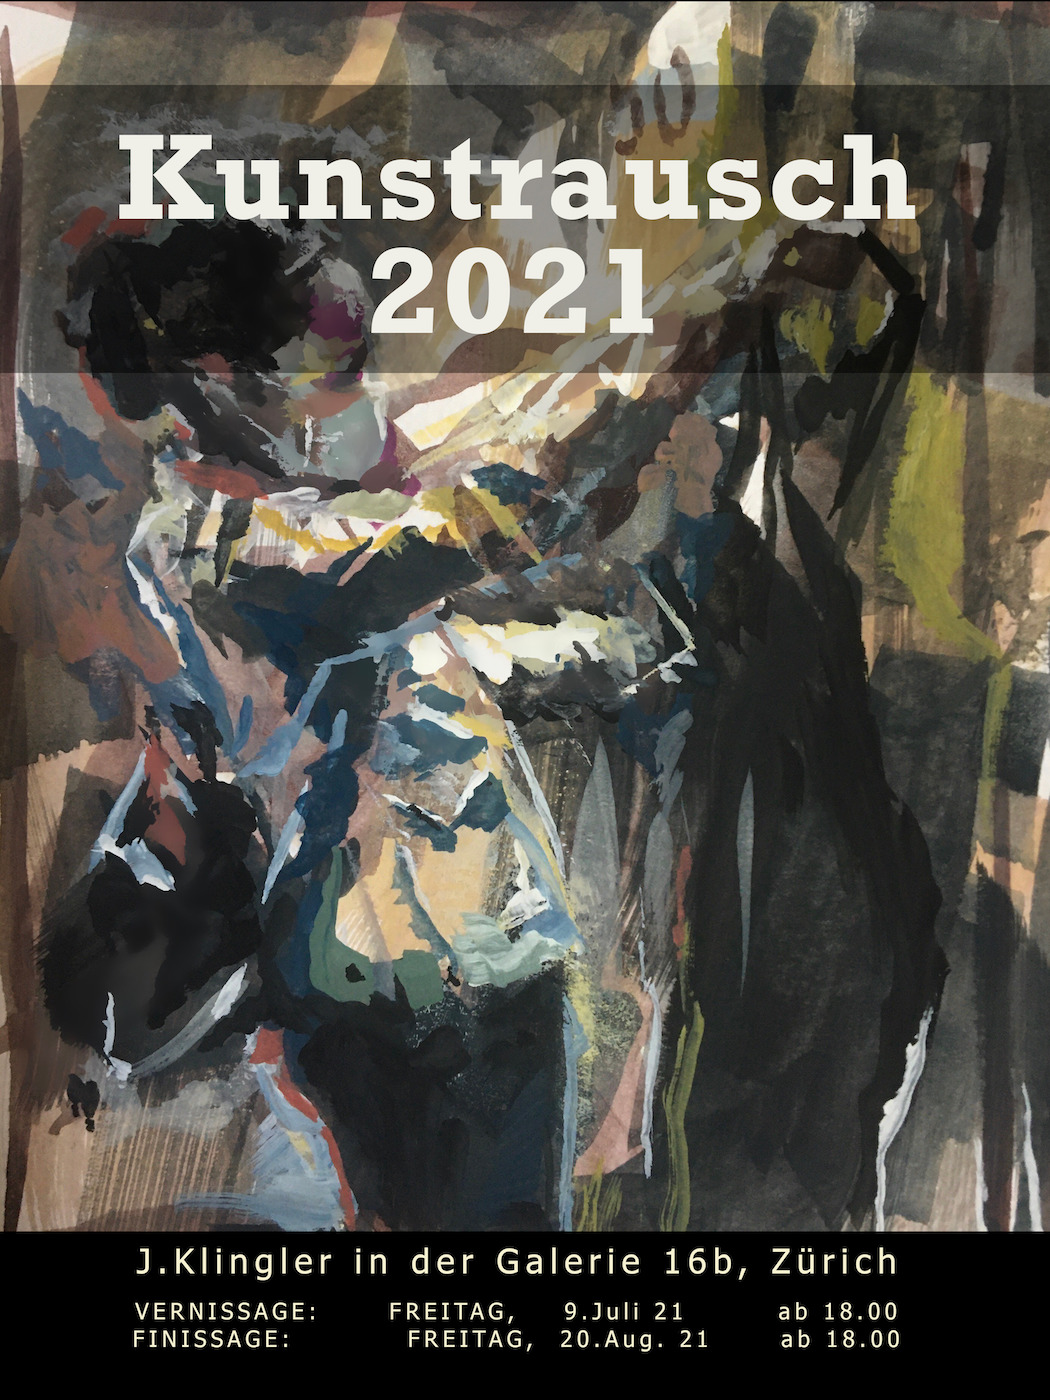 Kunstrausch 2021, J.Klingler in der Galerie 16b